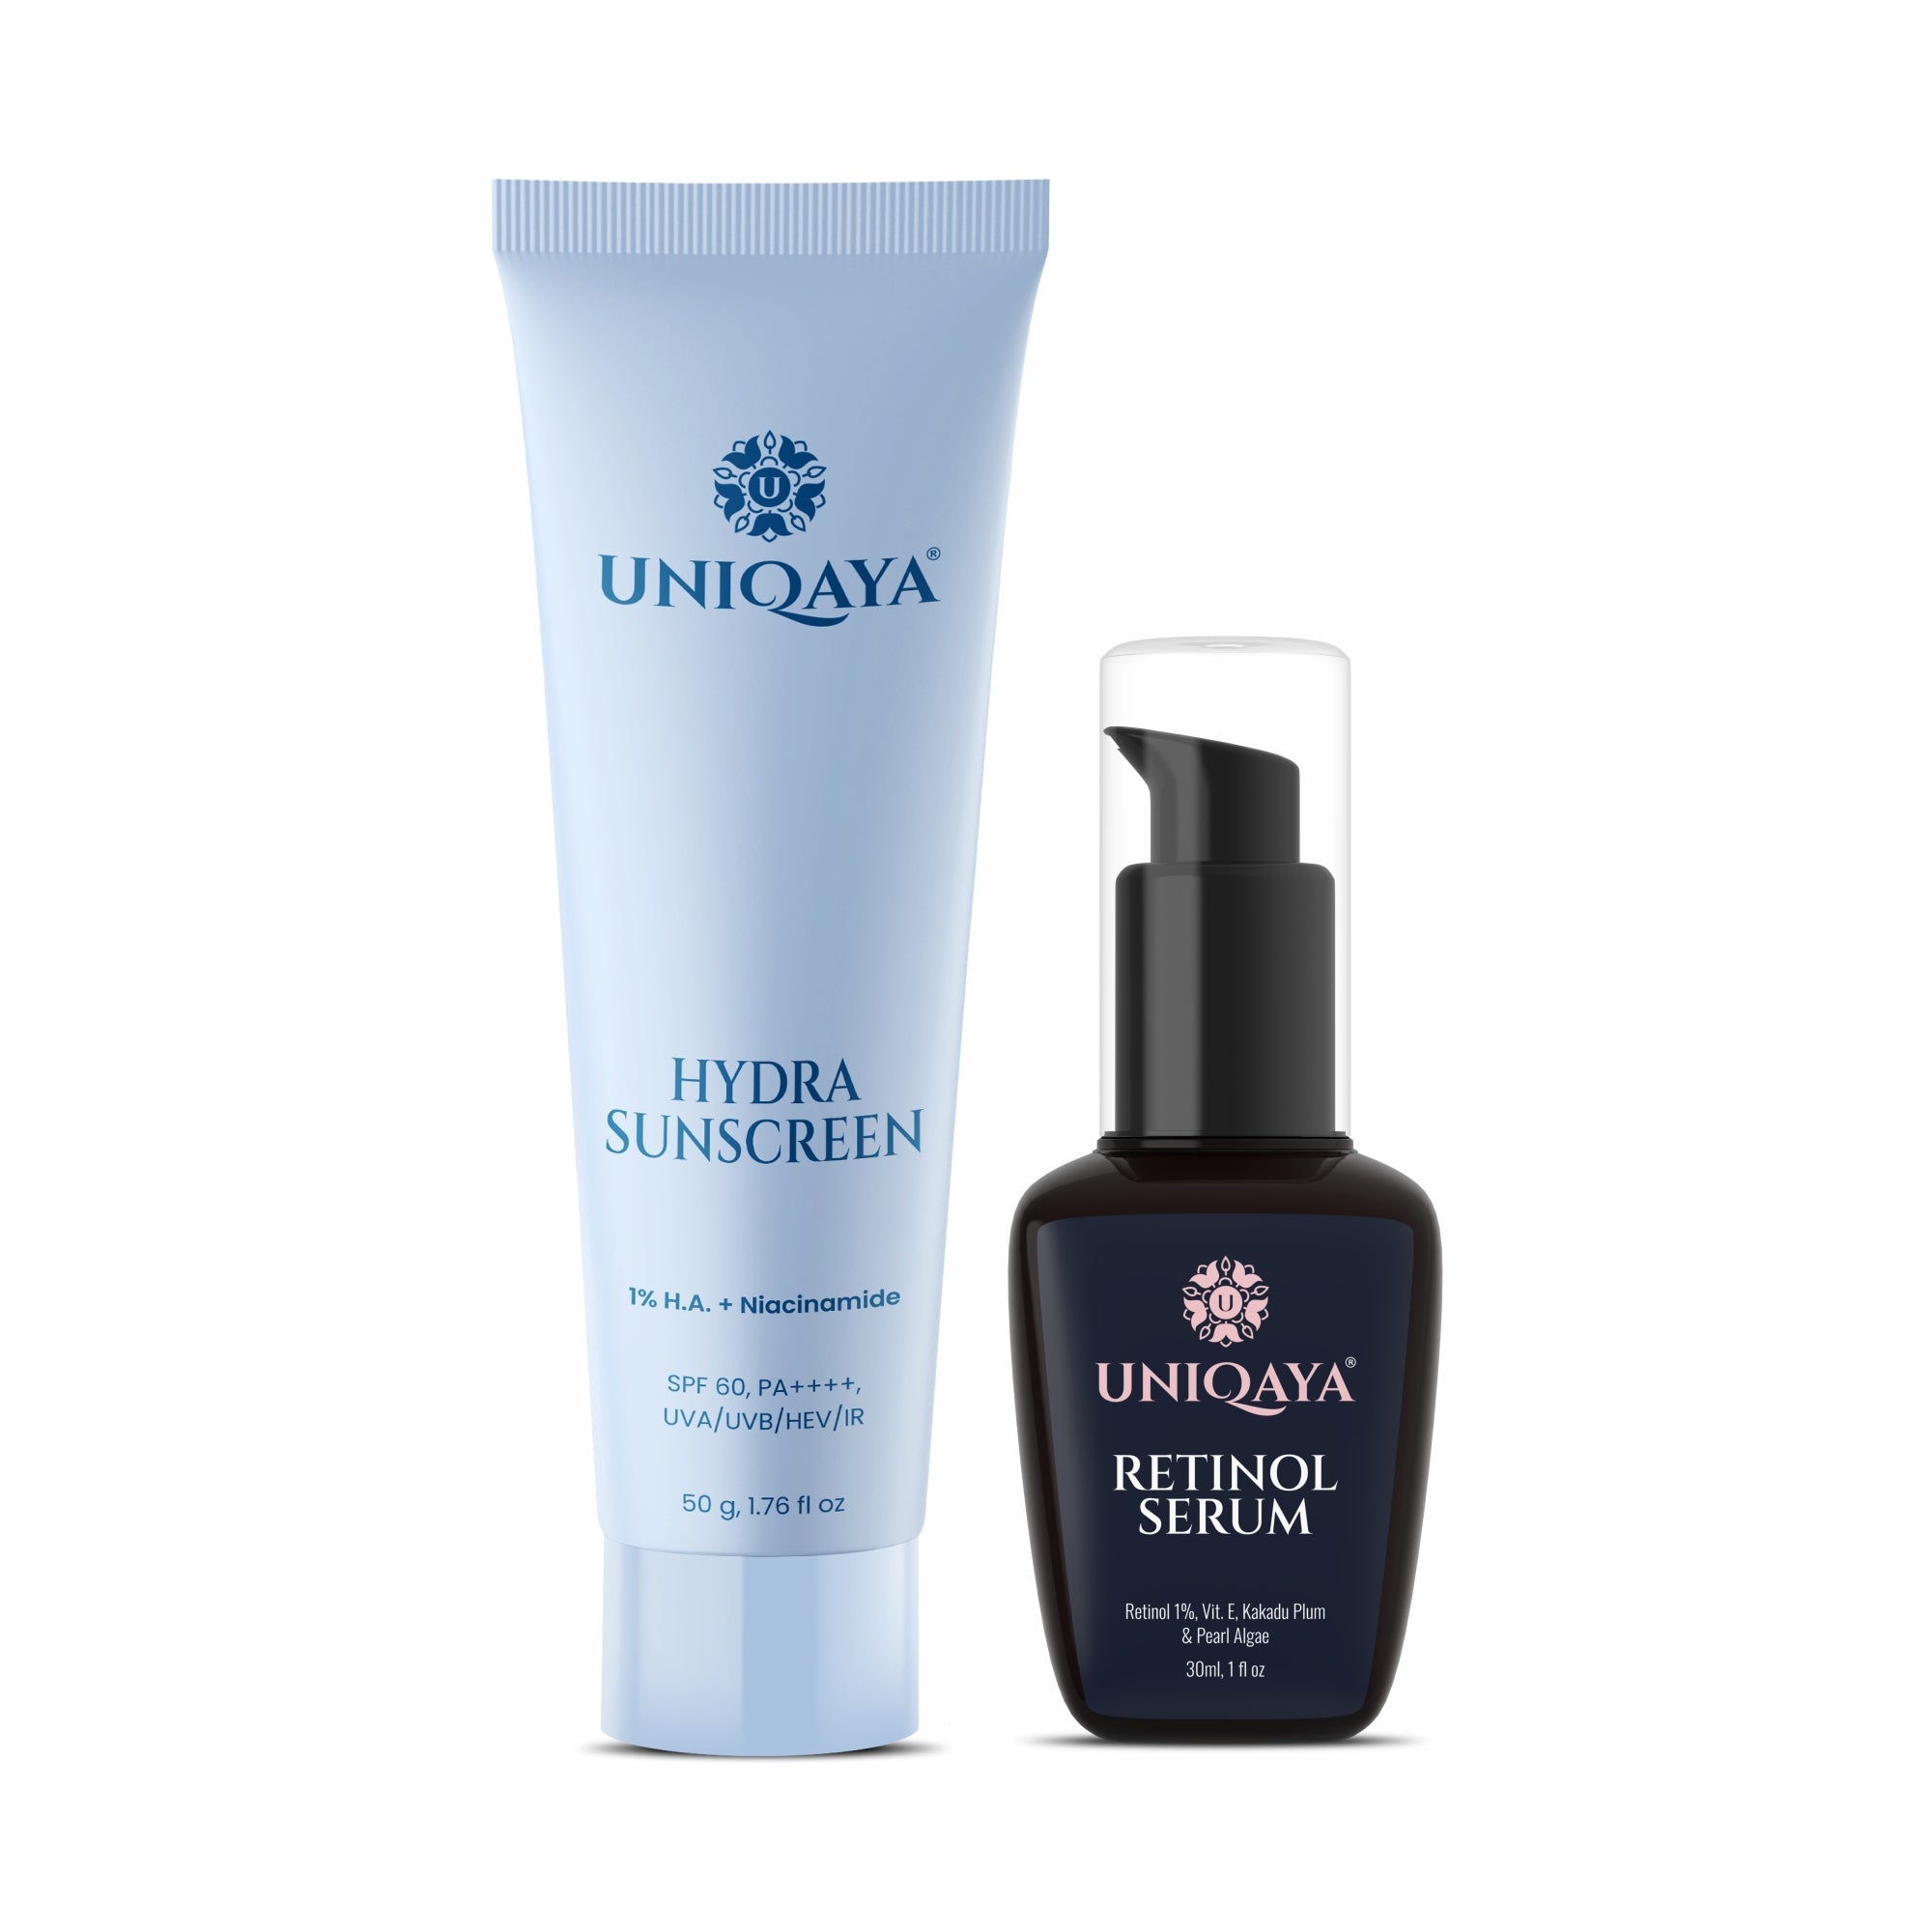 Hydra Sunscreen SPF 60 & 1% Encapsulated Vitamin E Retinol Face Serum | Skin Care Combo